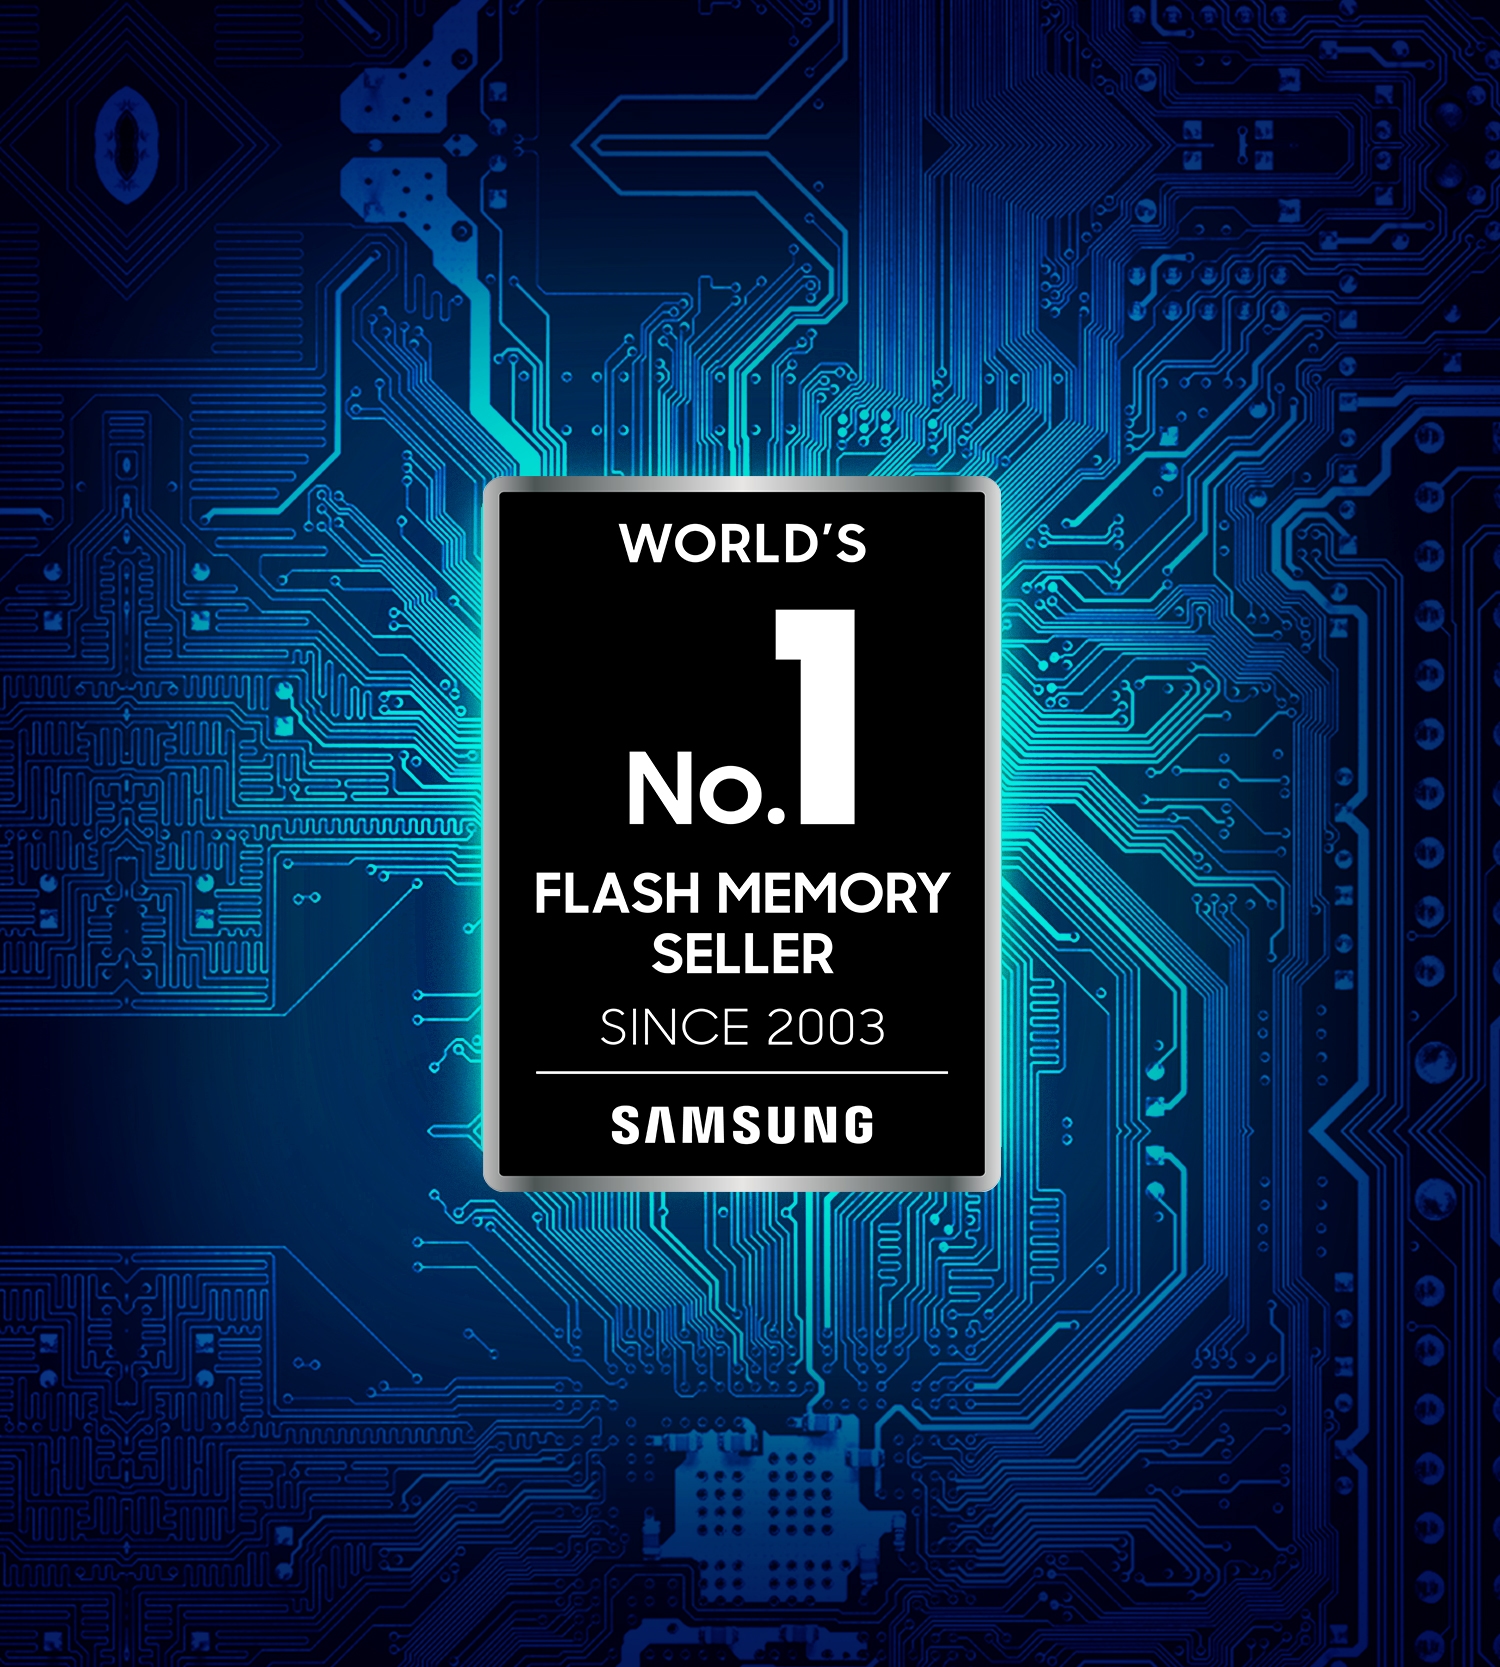 World's No. 1* Flash Memory Seller